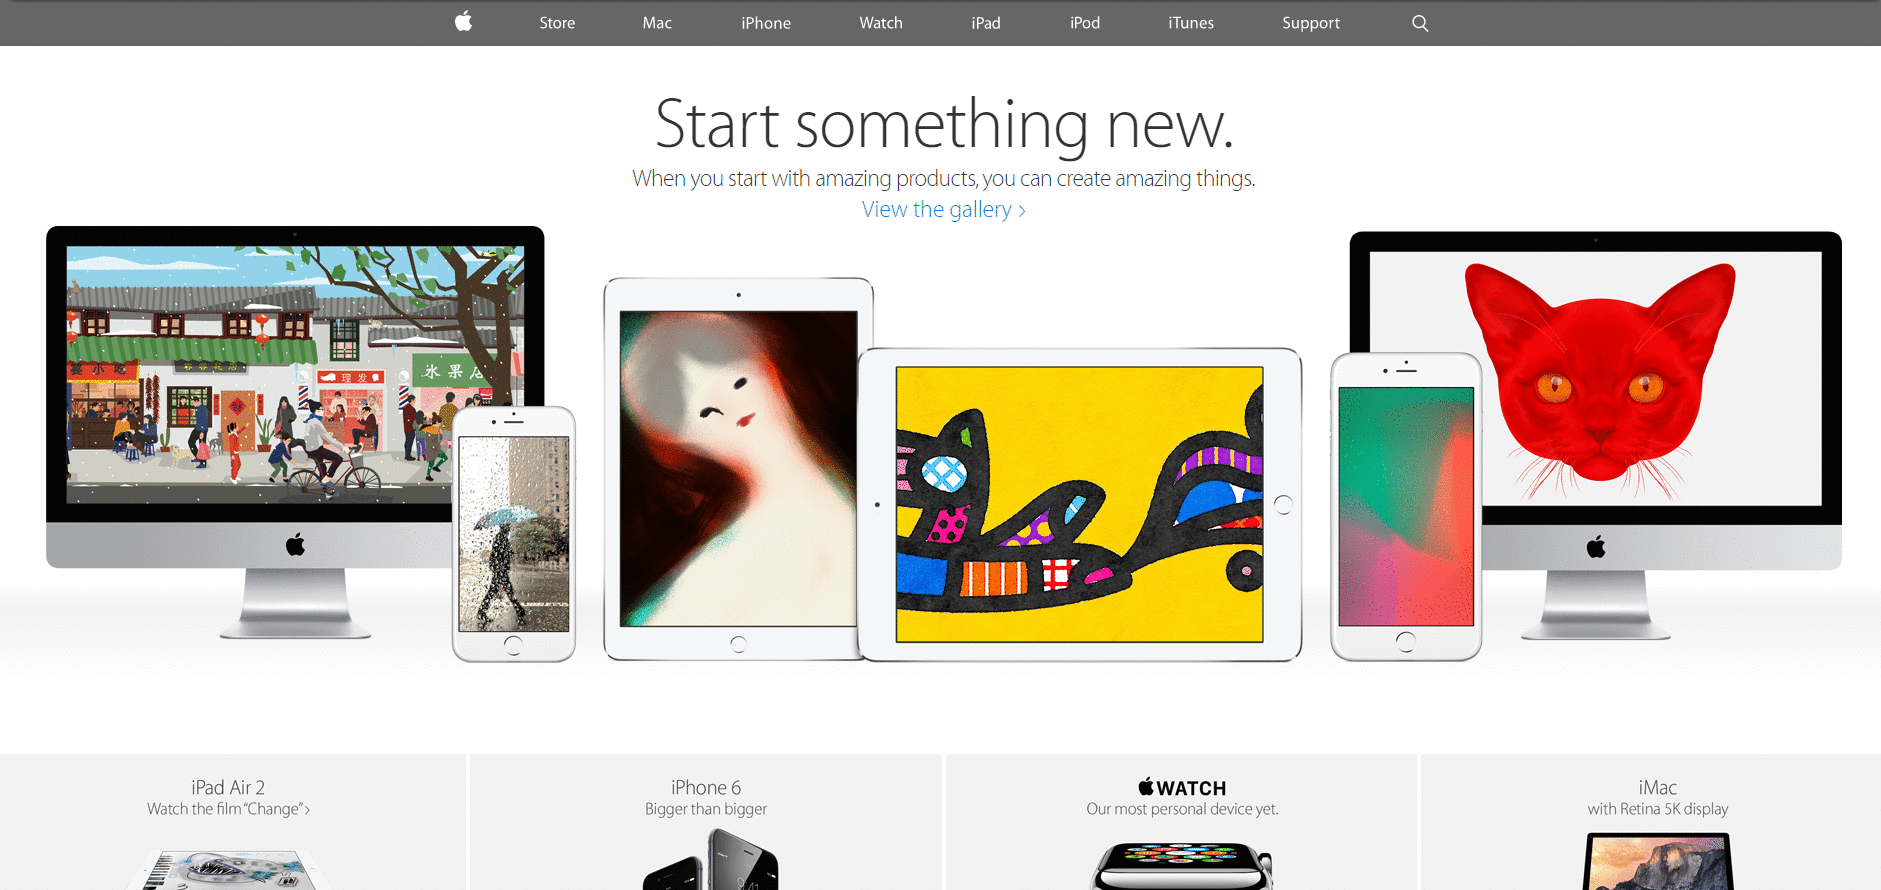 apple.com Website Design in 2015